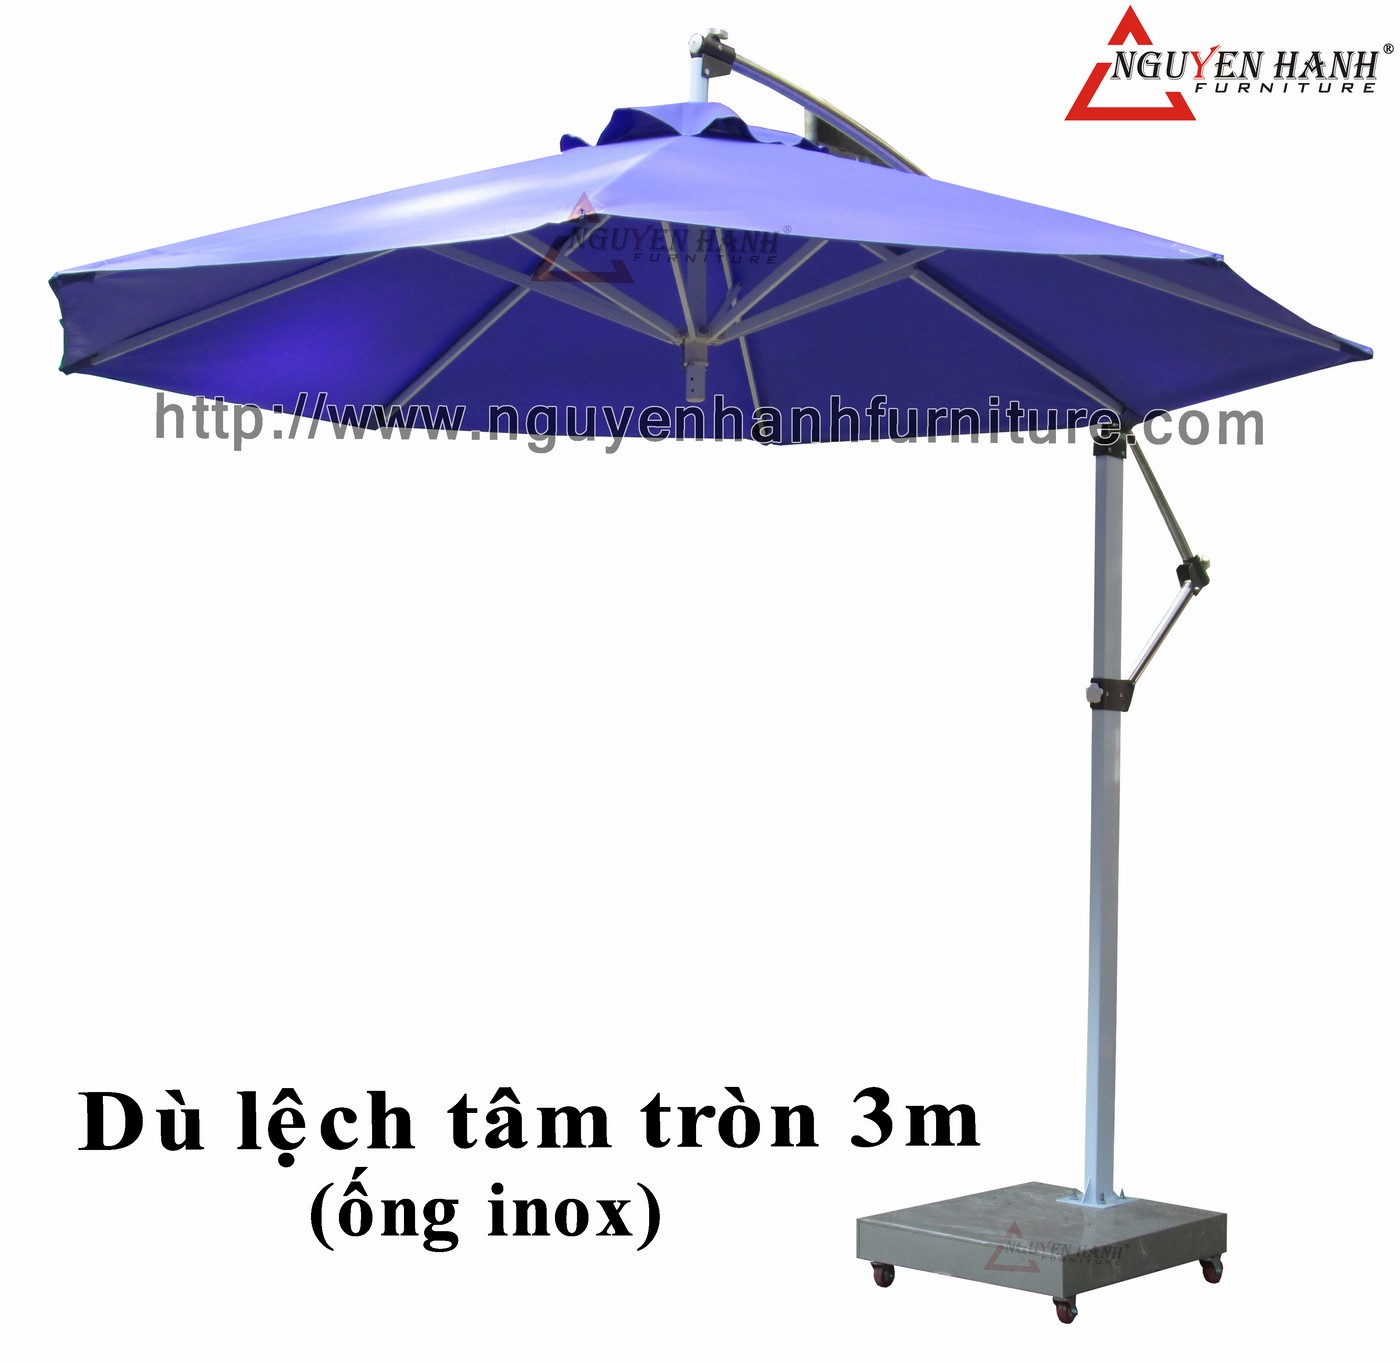 Name product: 3m Round Ellipse Umbrella  Dimensions:  Description: 